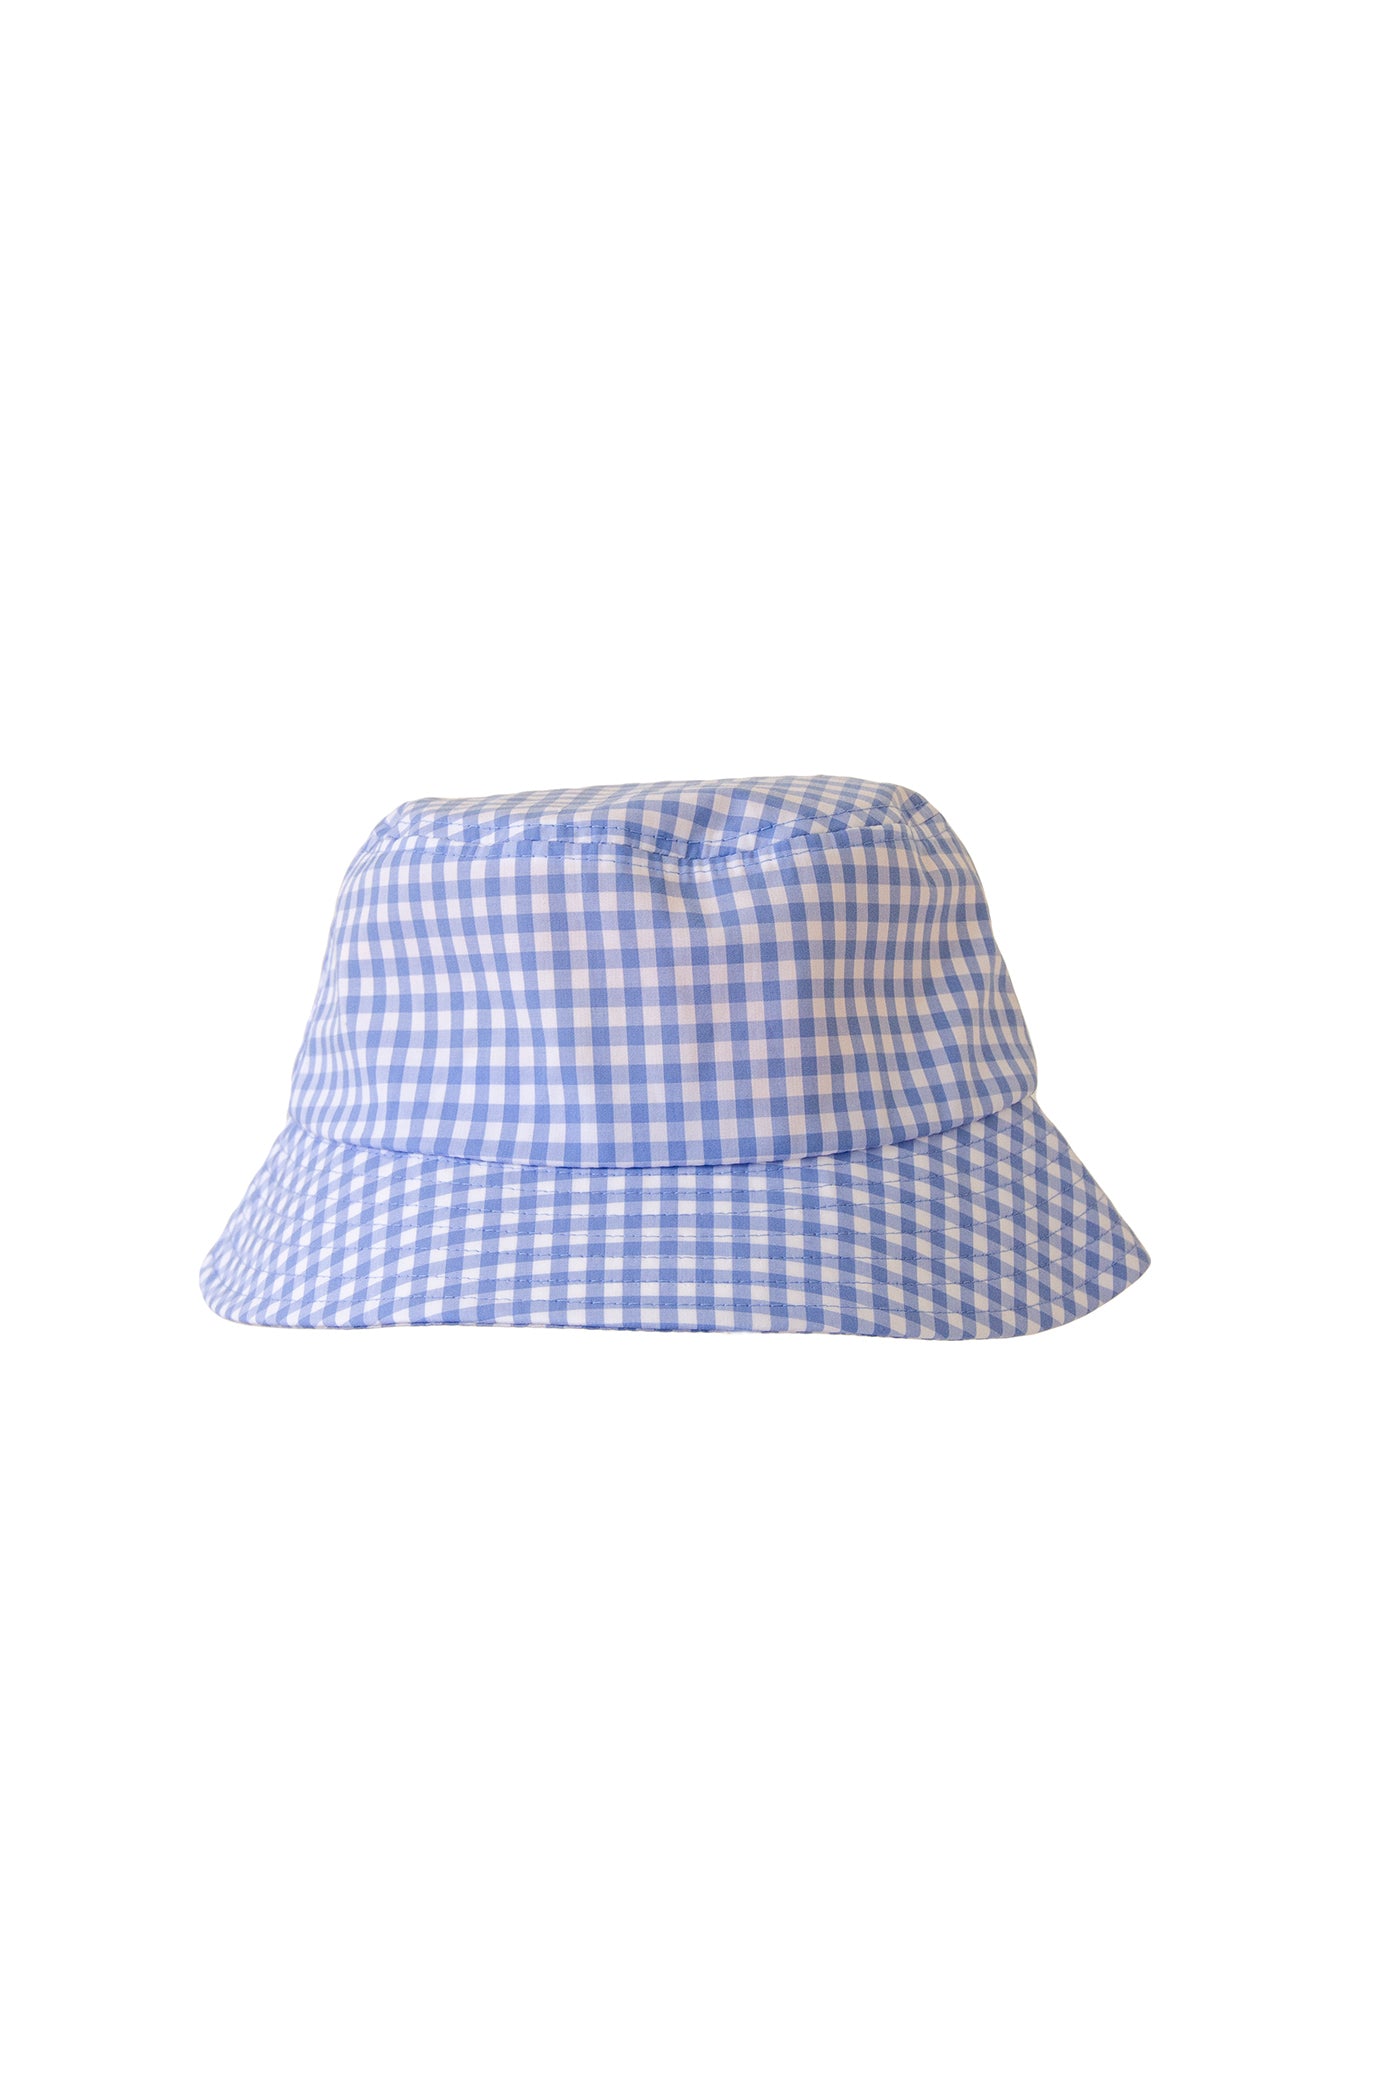 Gingham Buclet Hat